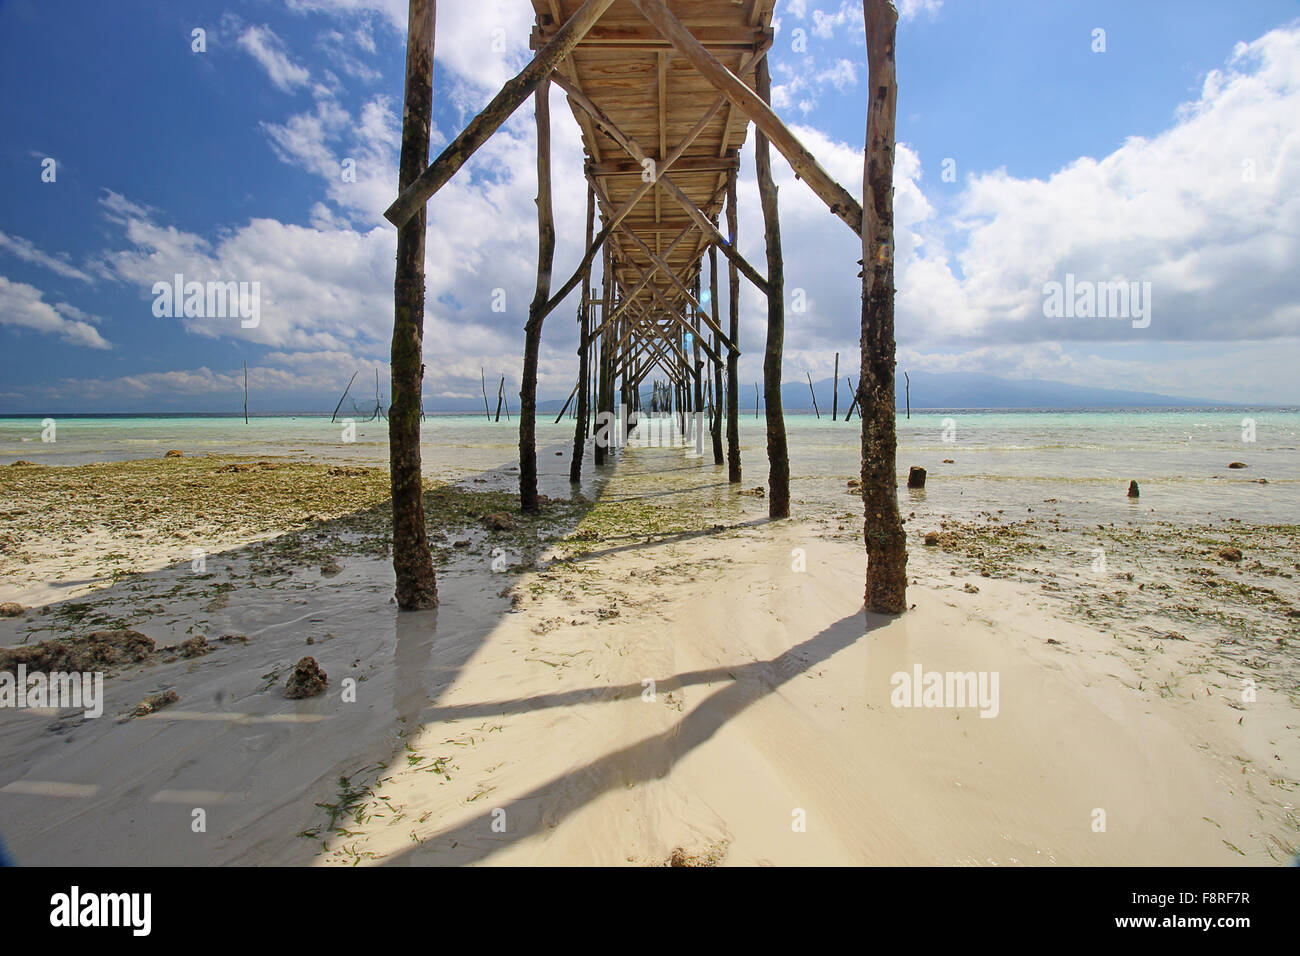 Holzsteg am Strand, Liang, Molukken, Indonesien Stockfoto